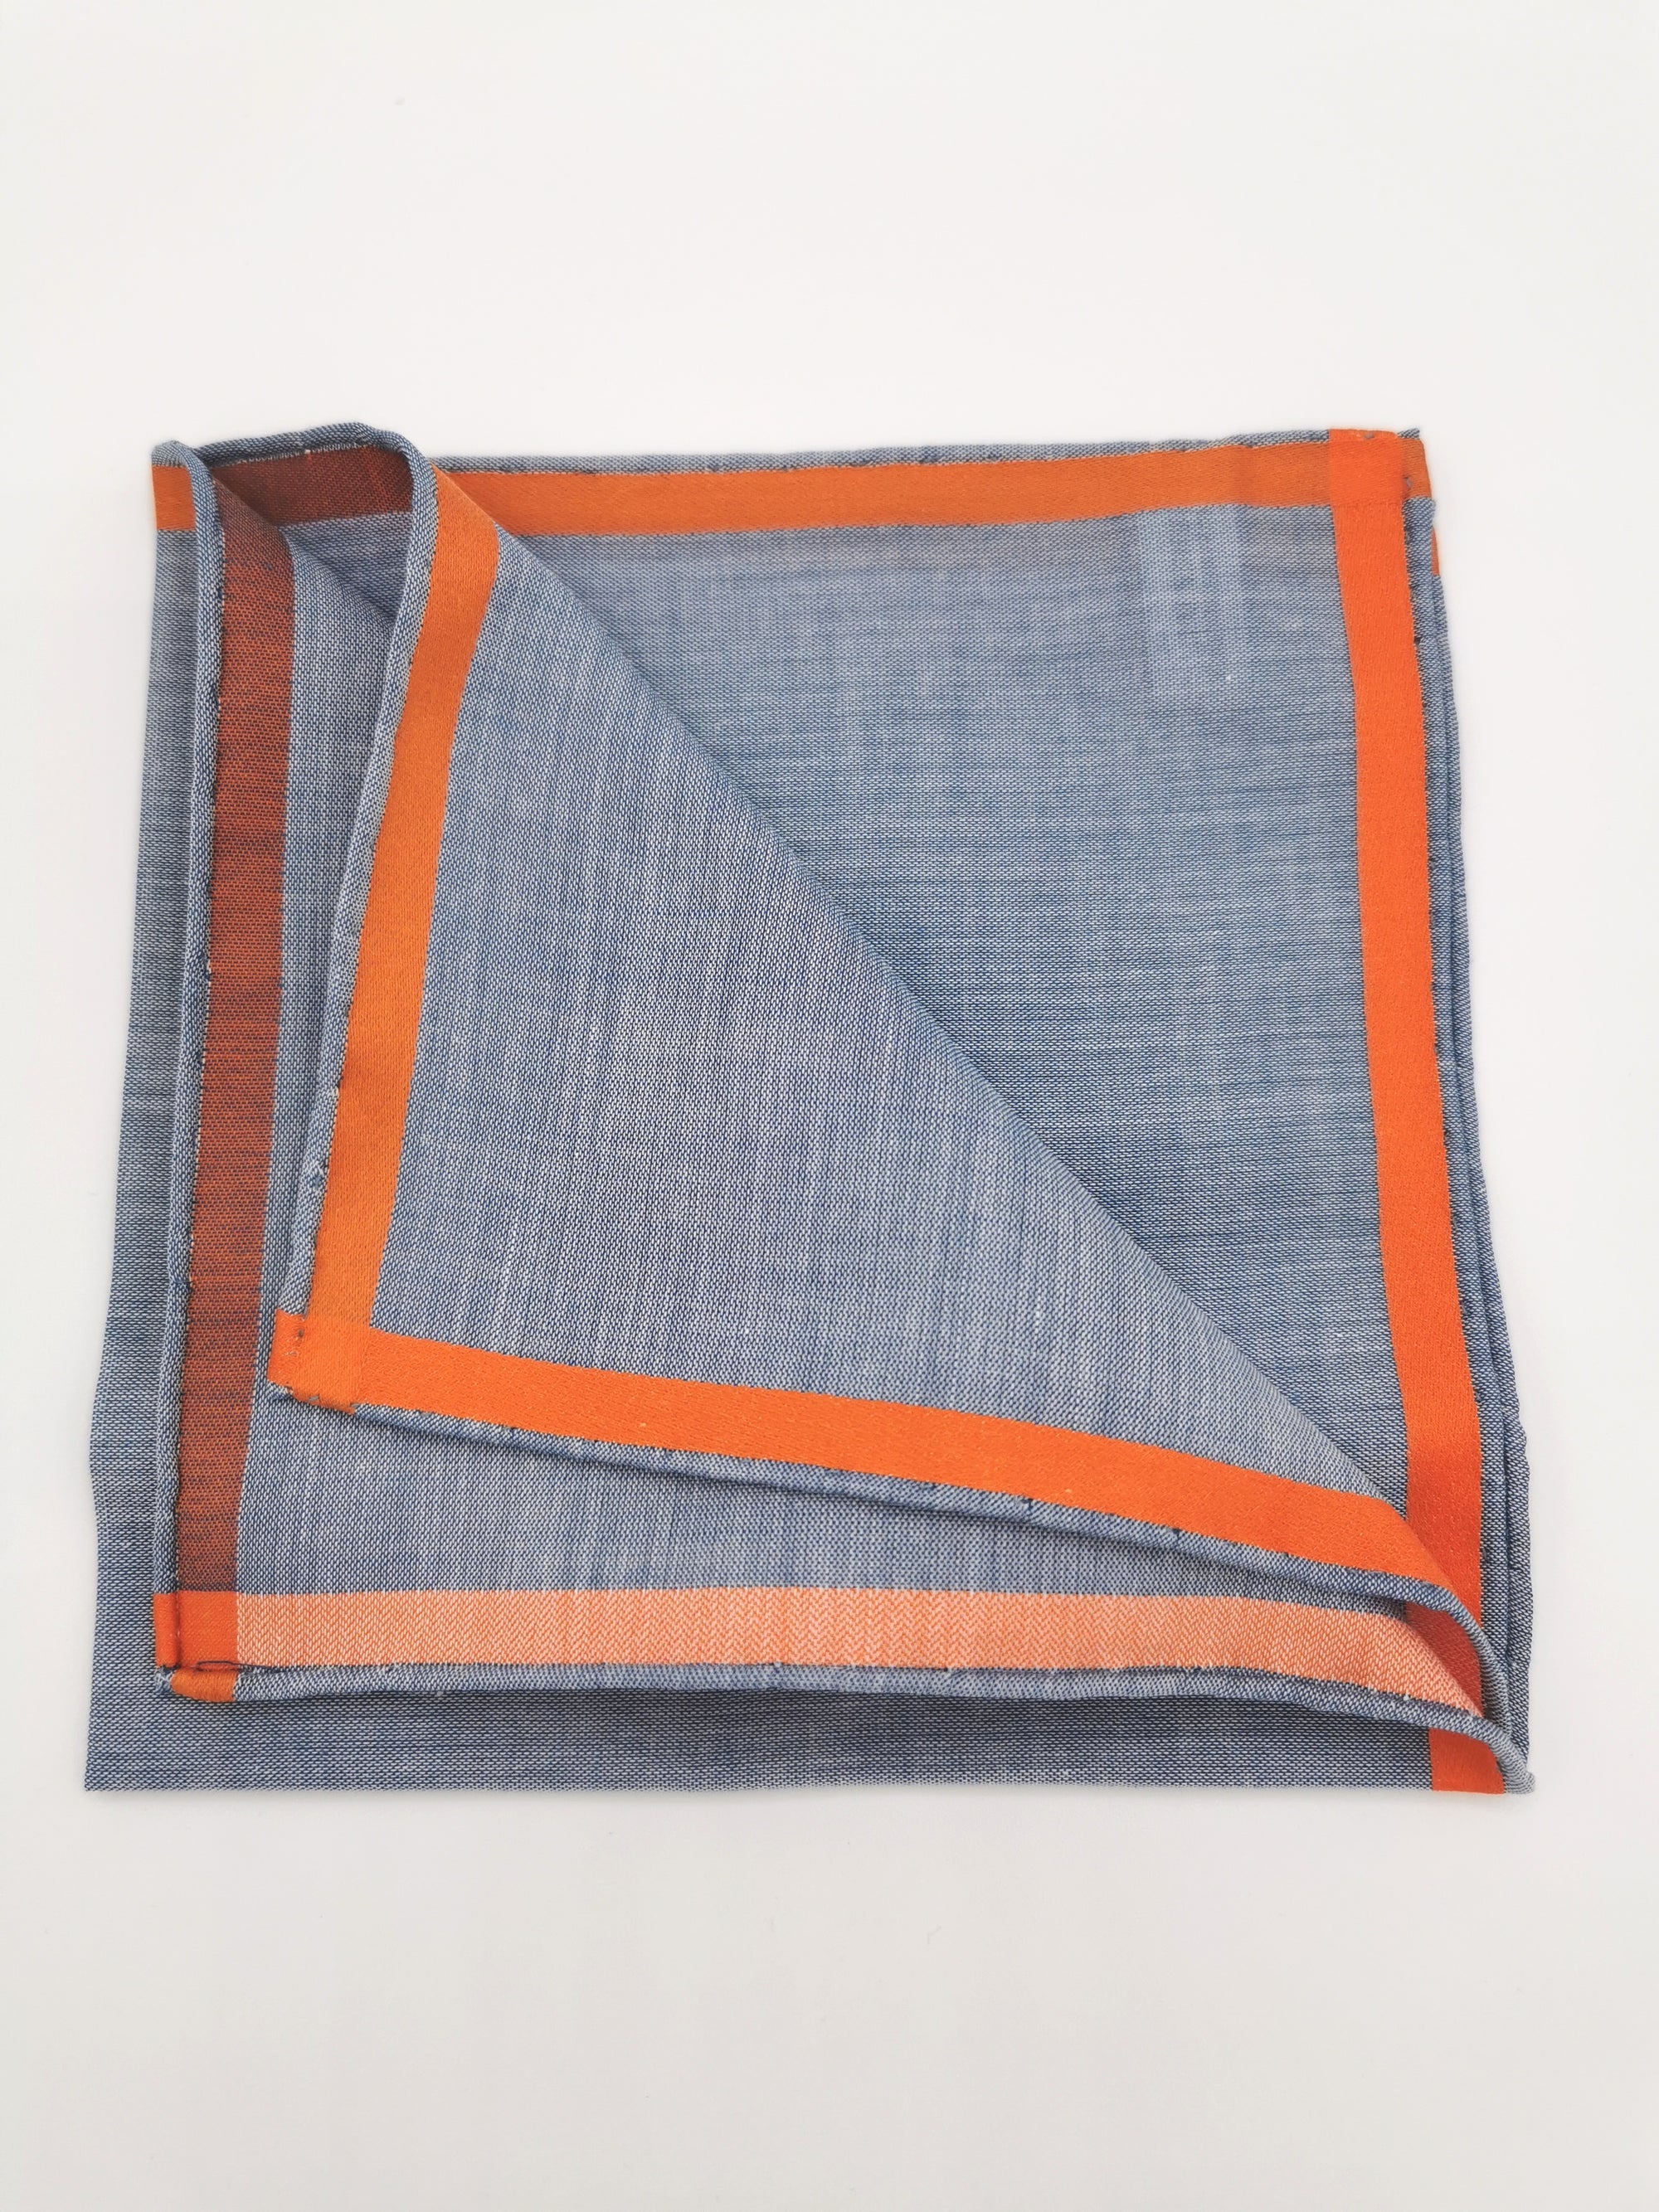 Simonnot-Godard blue pocket square with orange satin border